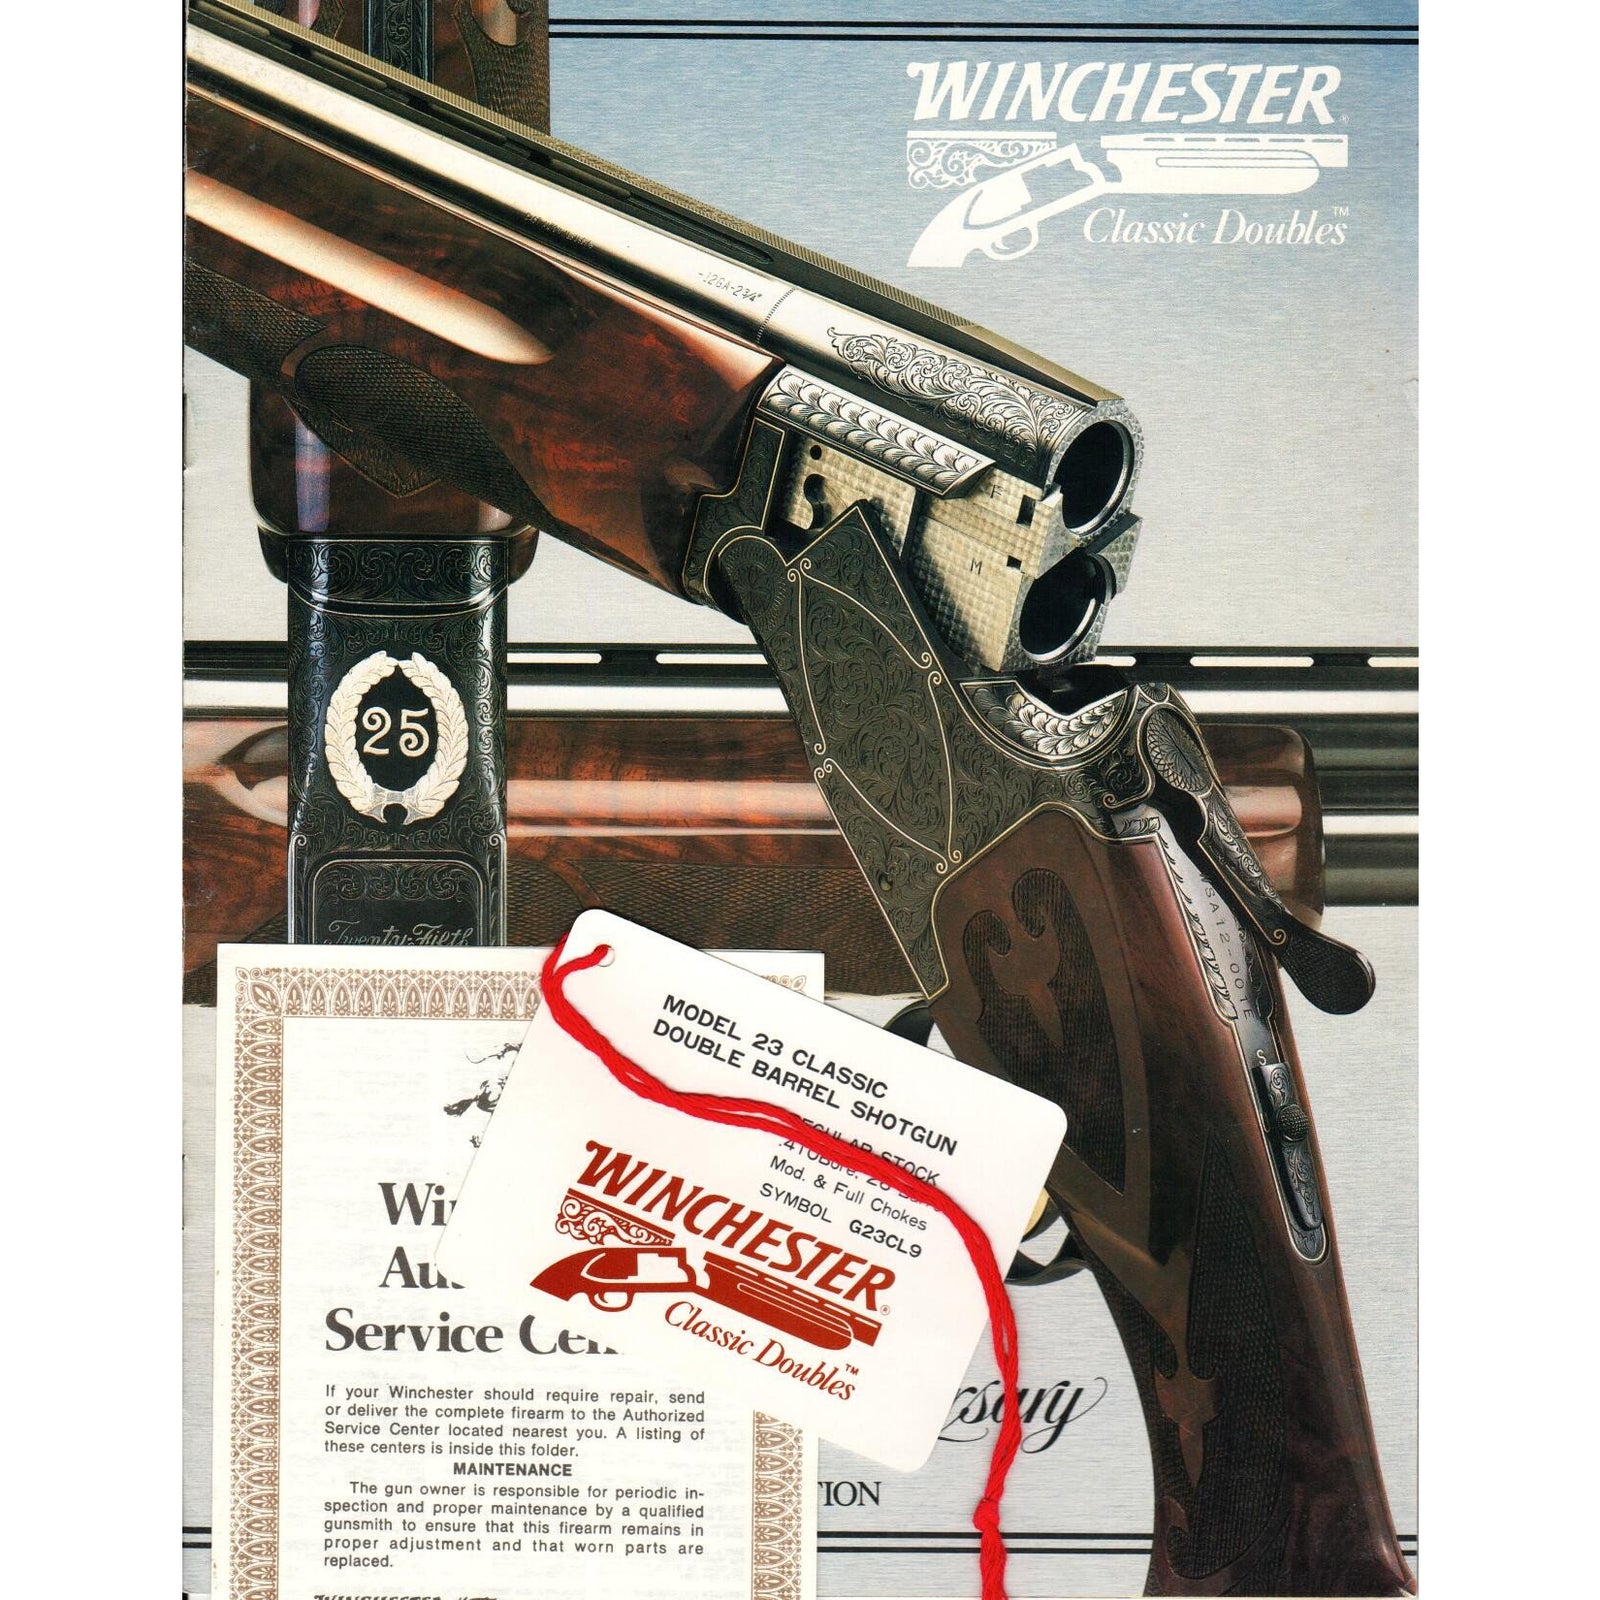 Winchester Classic Doubles Silver Anniversary Edition